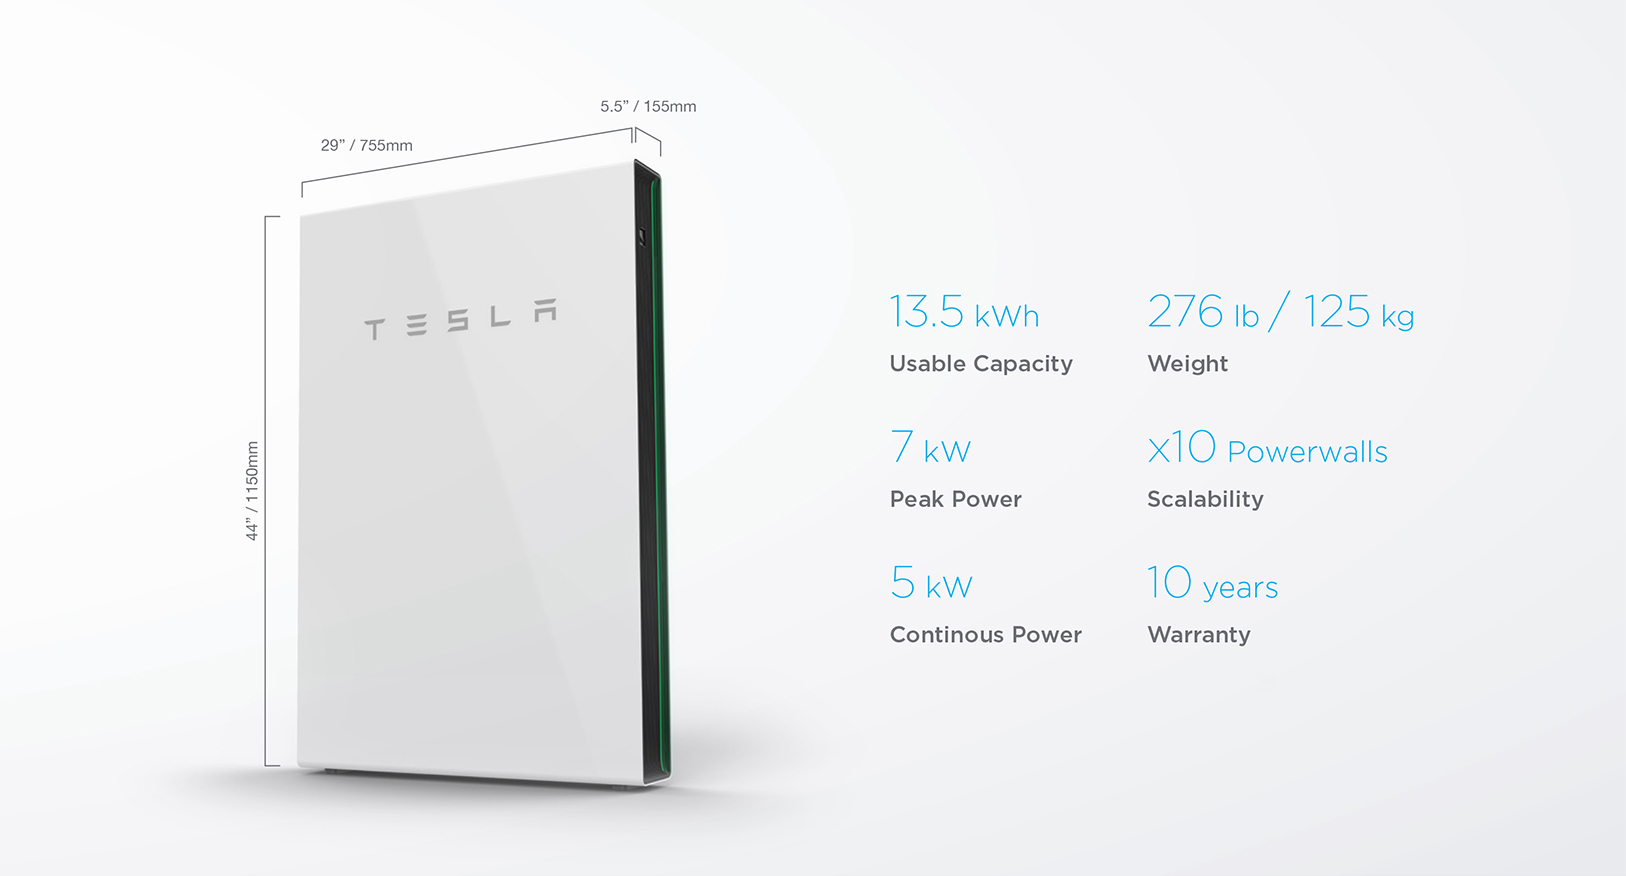 Tesla Powerwall Specs: (Capacity: 13.5kWh, Weight: 276lb / 125kg, Peak Power: 7kw, Scalability: x10 Powerwalls, Continuous Power: 5kw, Warranty:10 Years, Dimensions: 44inx29inx5.5in)